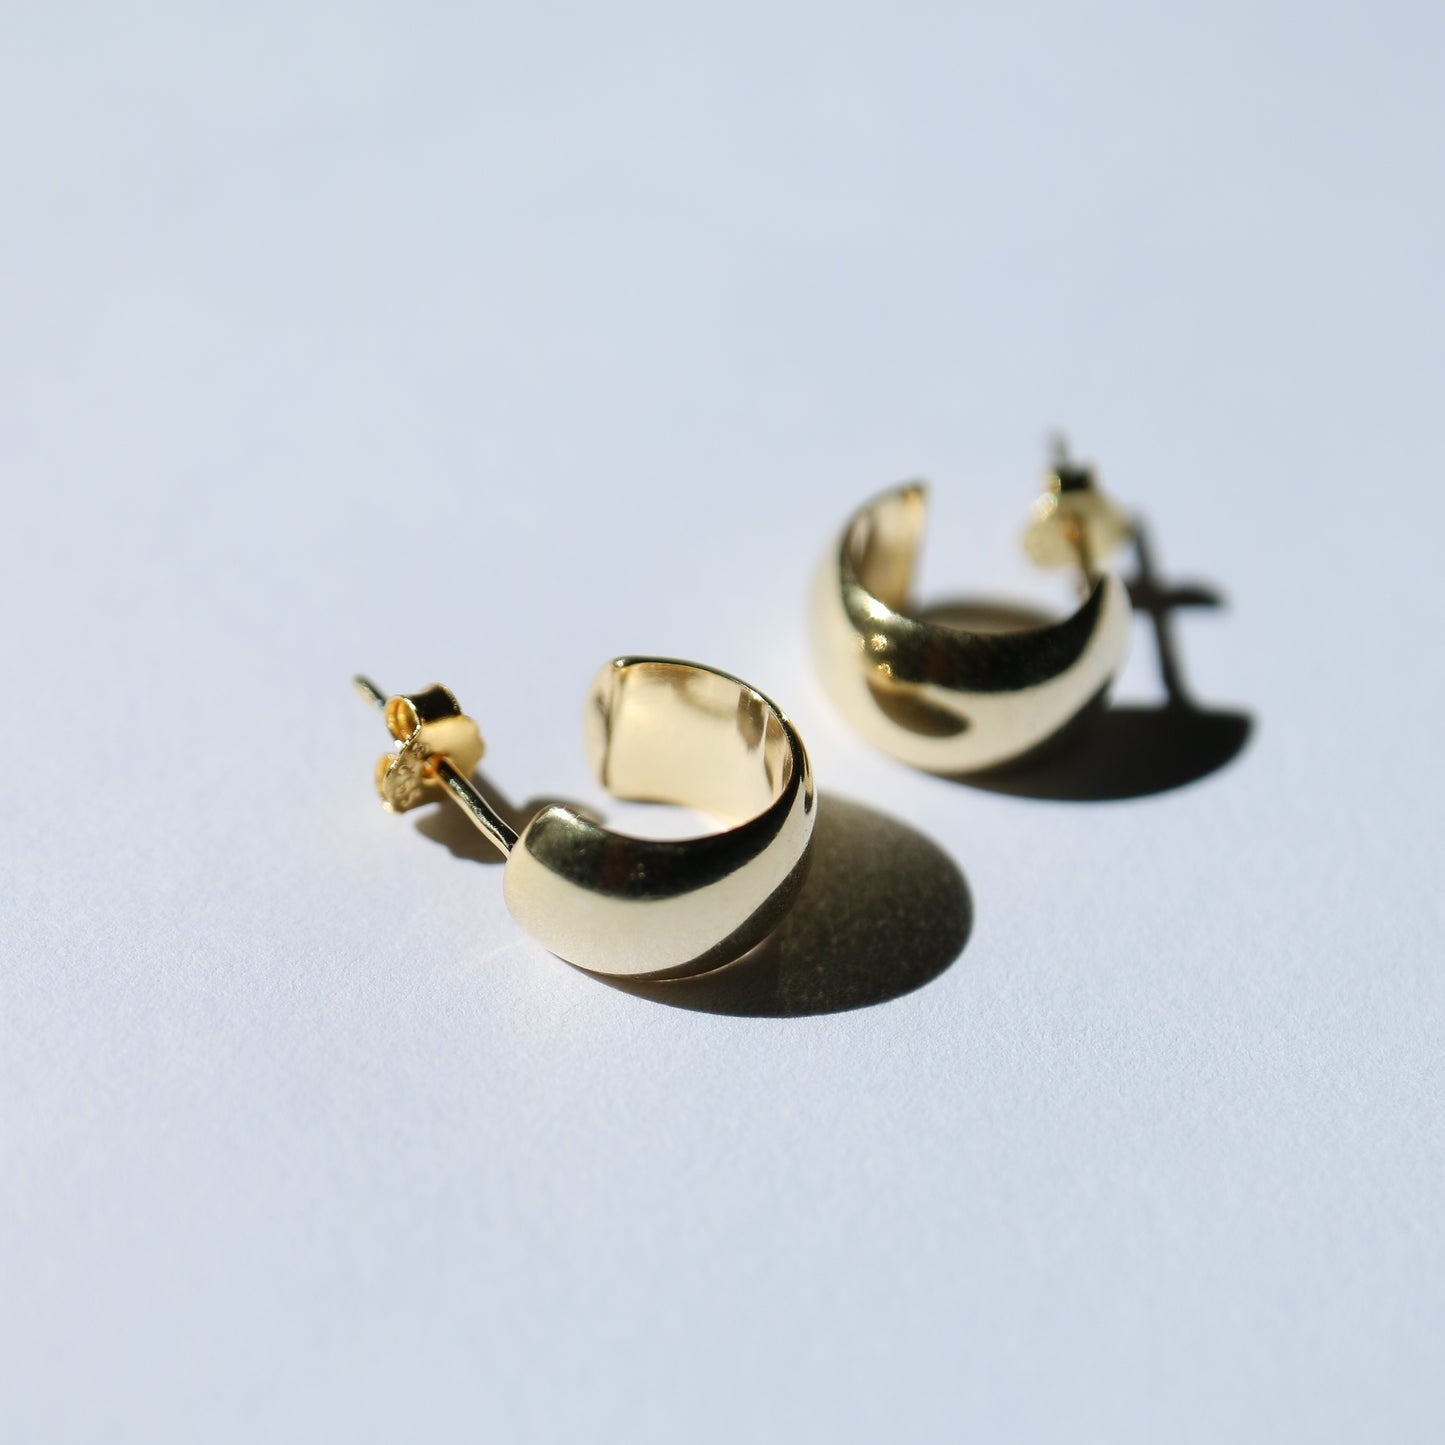 C-shaped domed earrings in gold